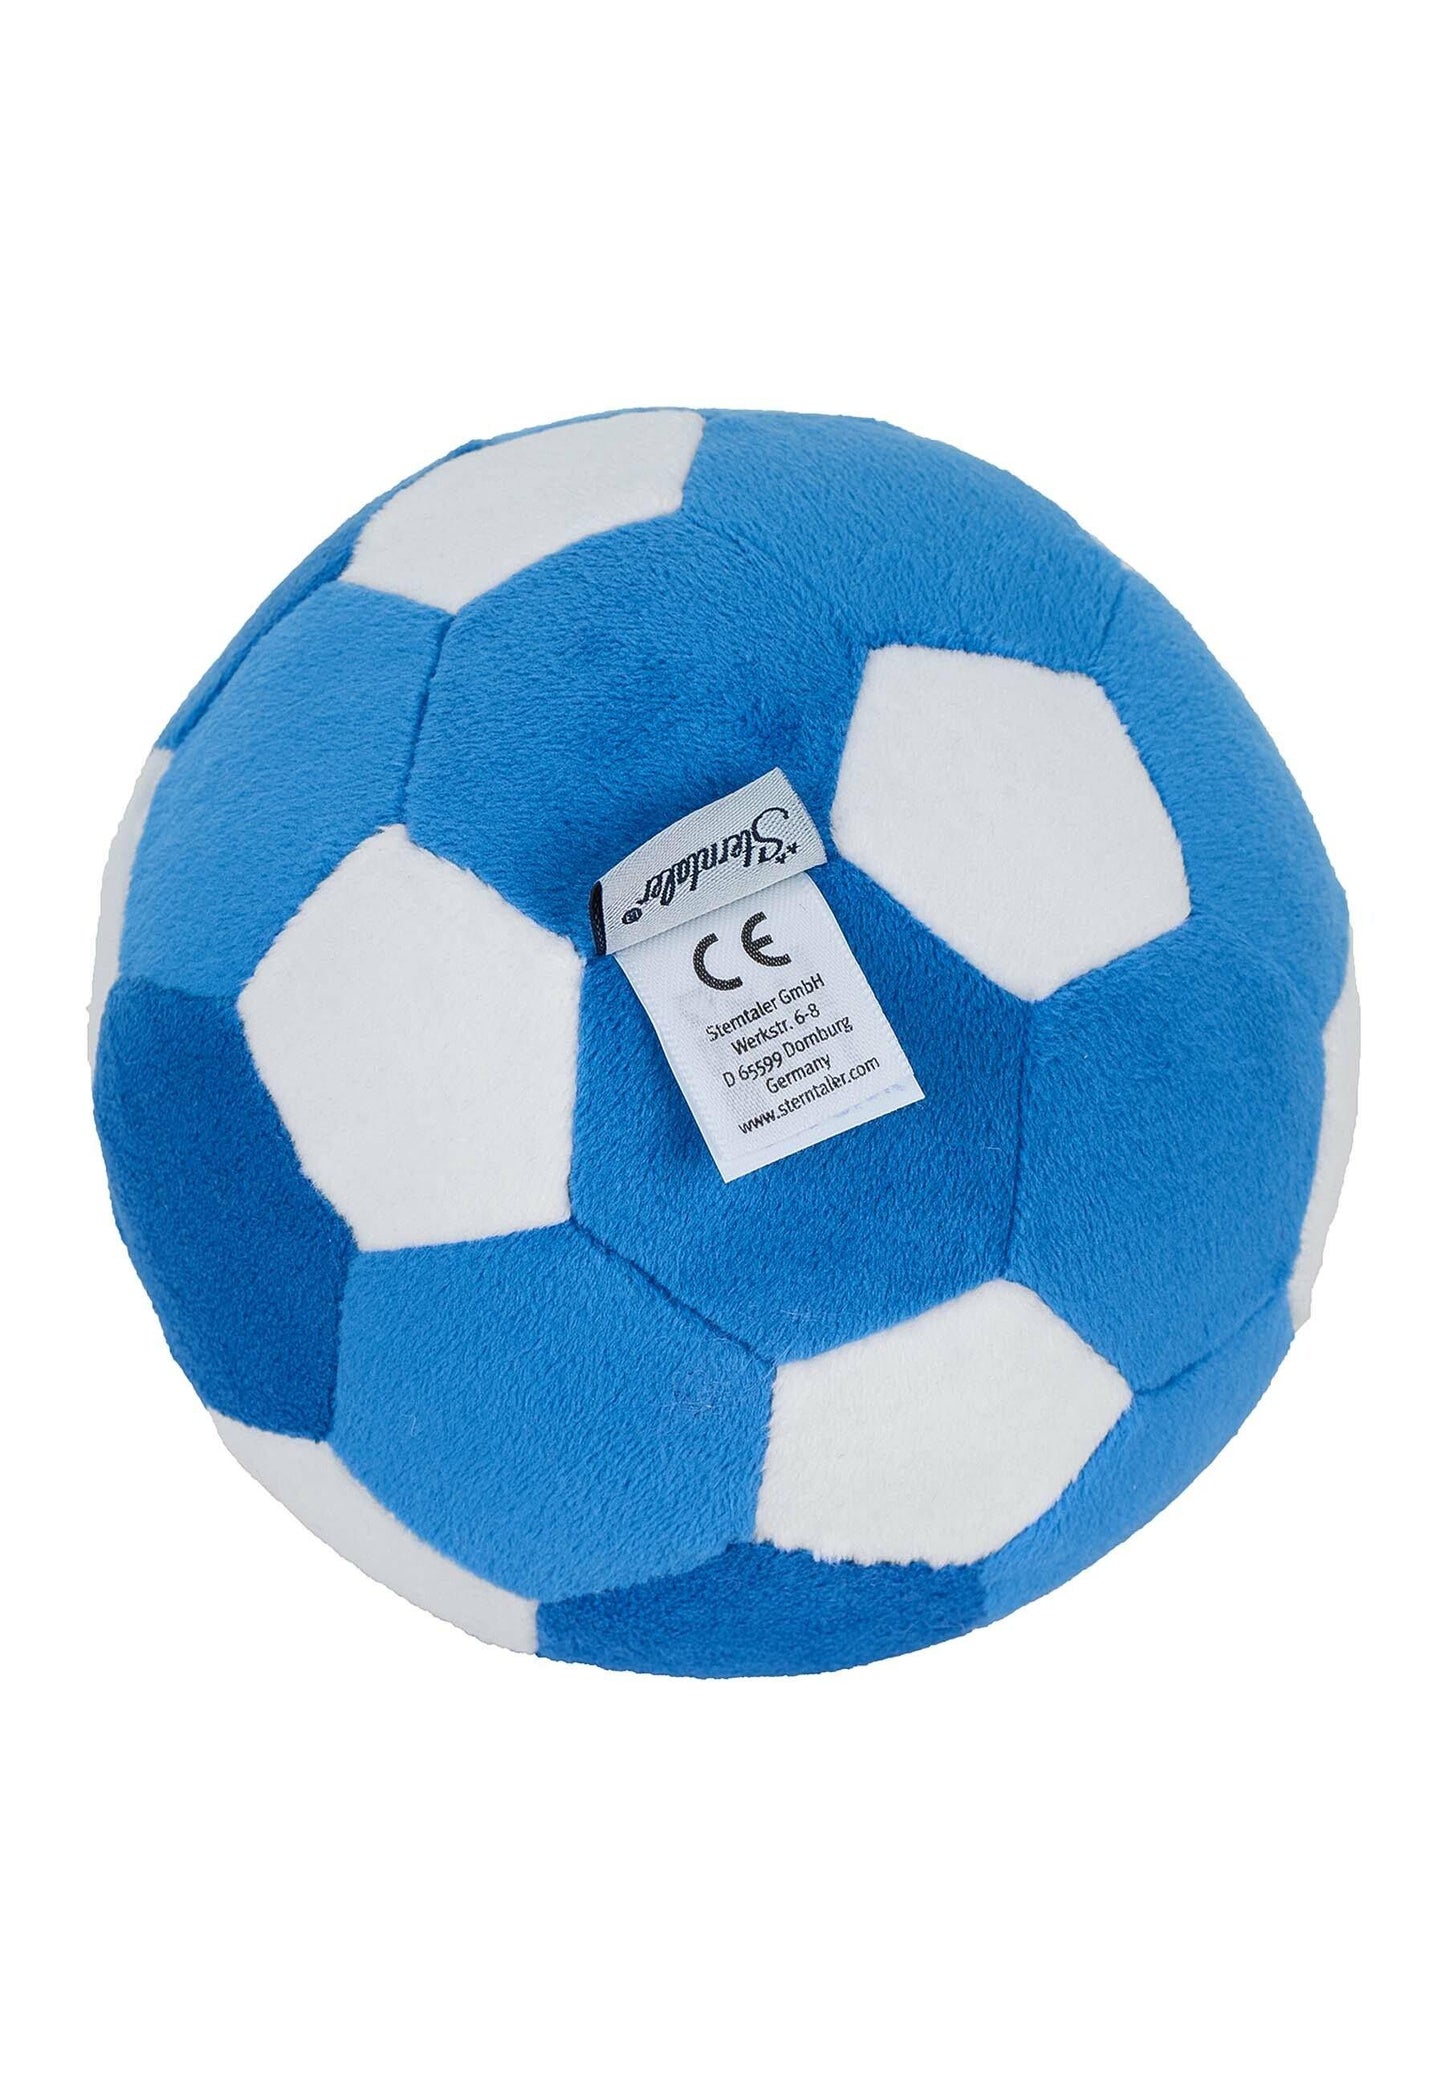 Ball blau/weiß Bälle - Sterntaler GmbH